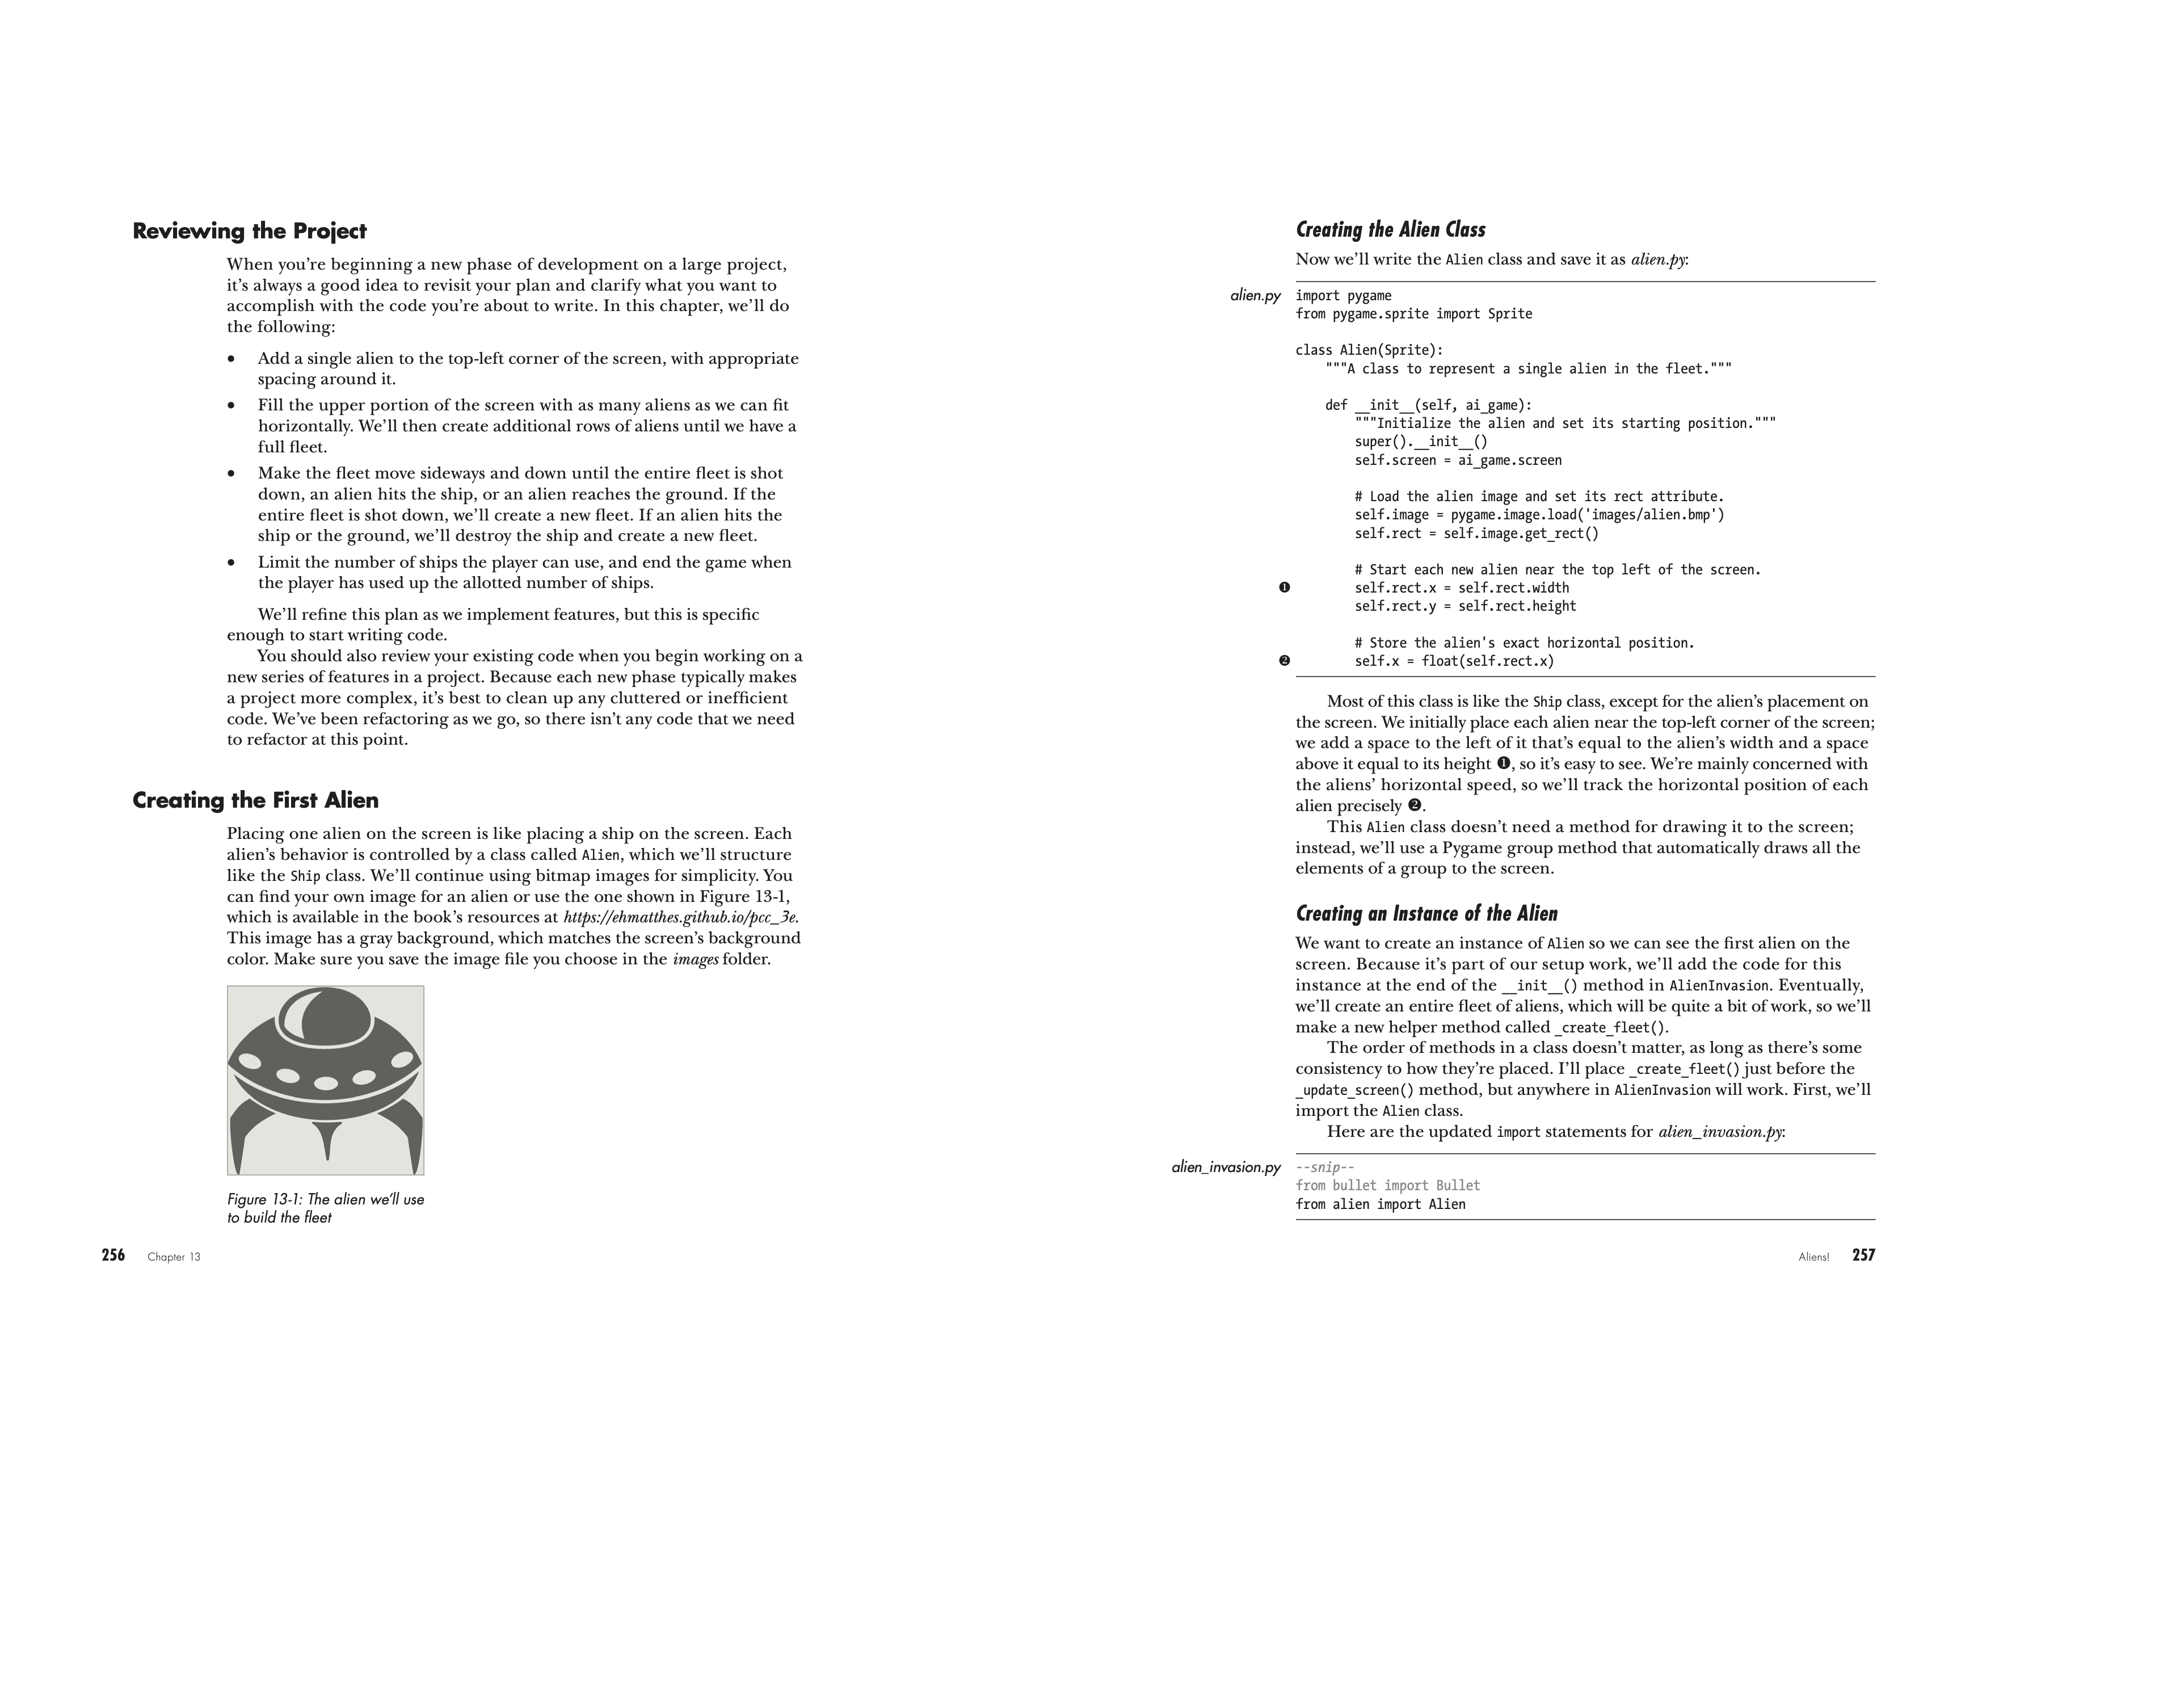 Python Crash Course, 3rd Edition pages 256-257